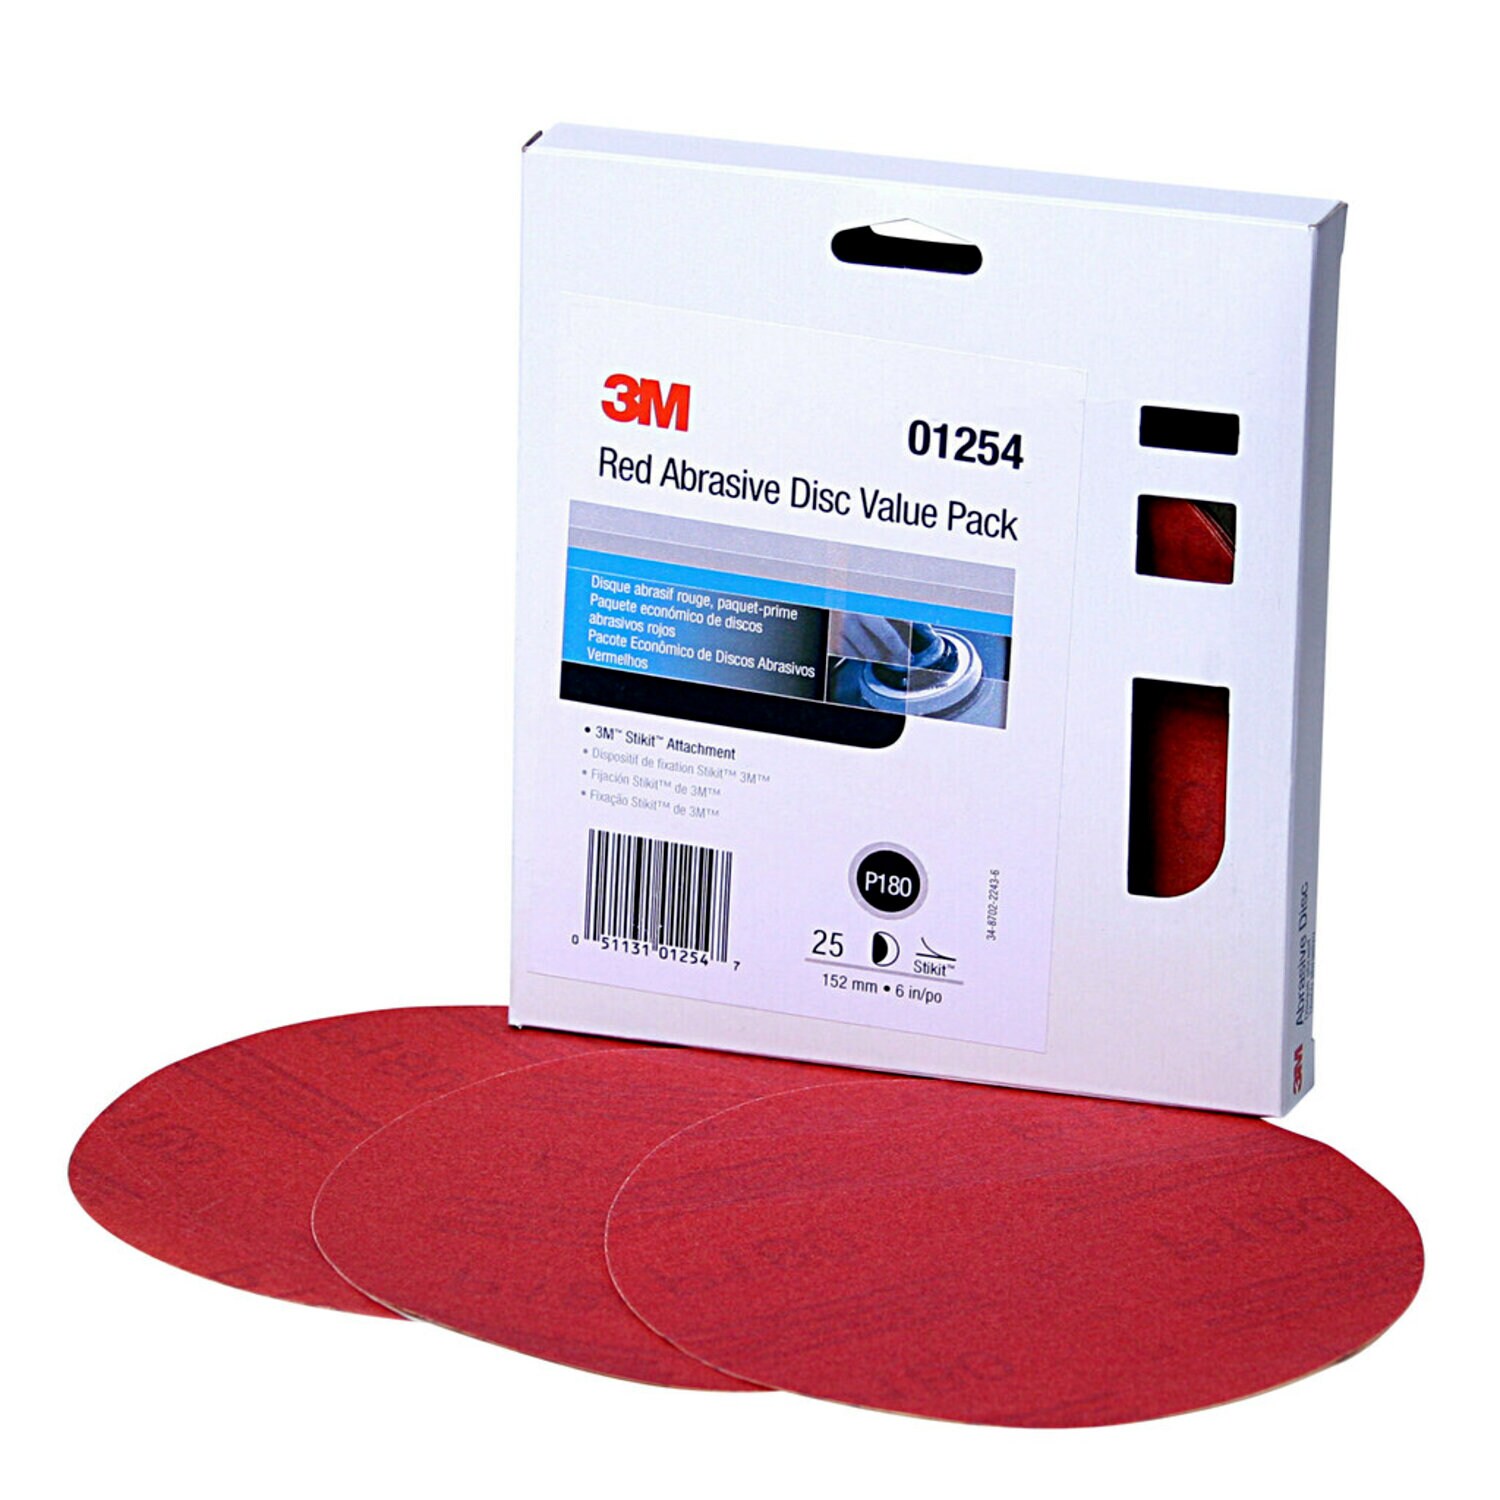 7010362822 - 3M Red Abrasive Stikit Disc Value Pack, 01254, 6 in, P180 grade, 25
discs per carton, 4 cartons per case